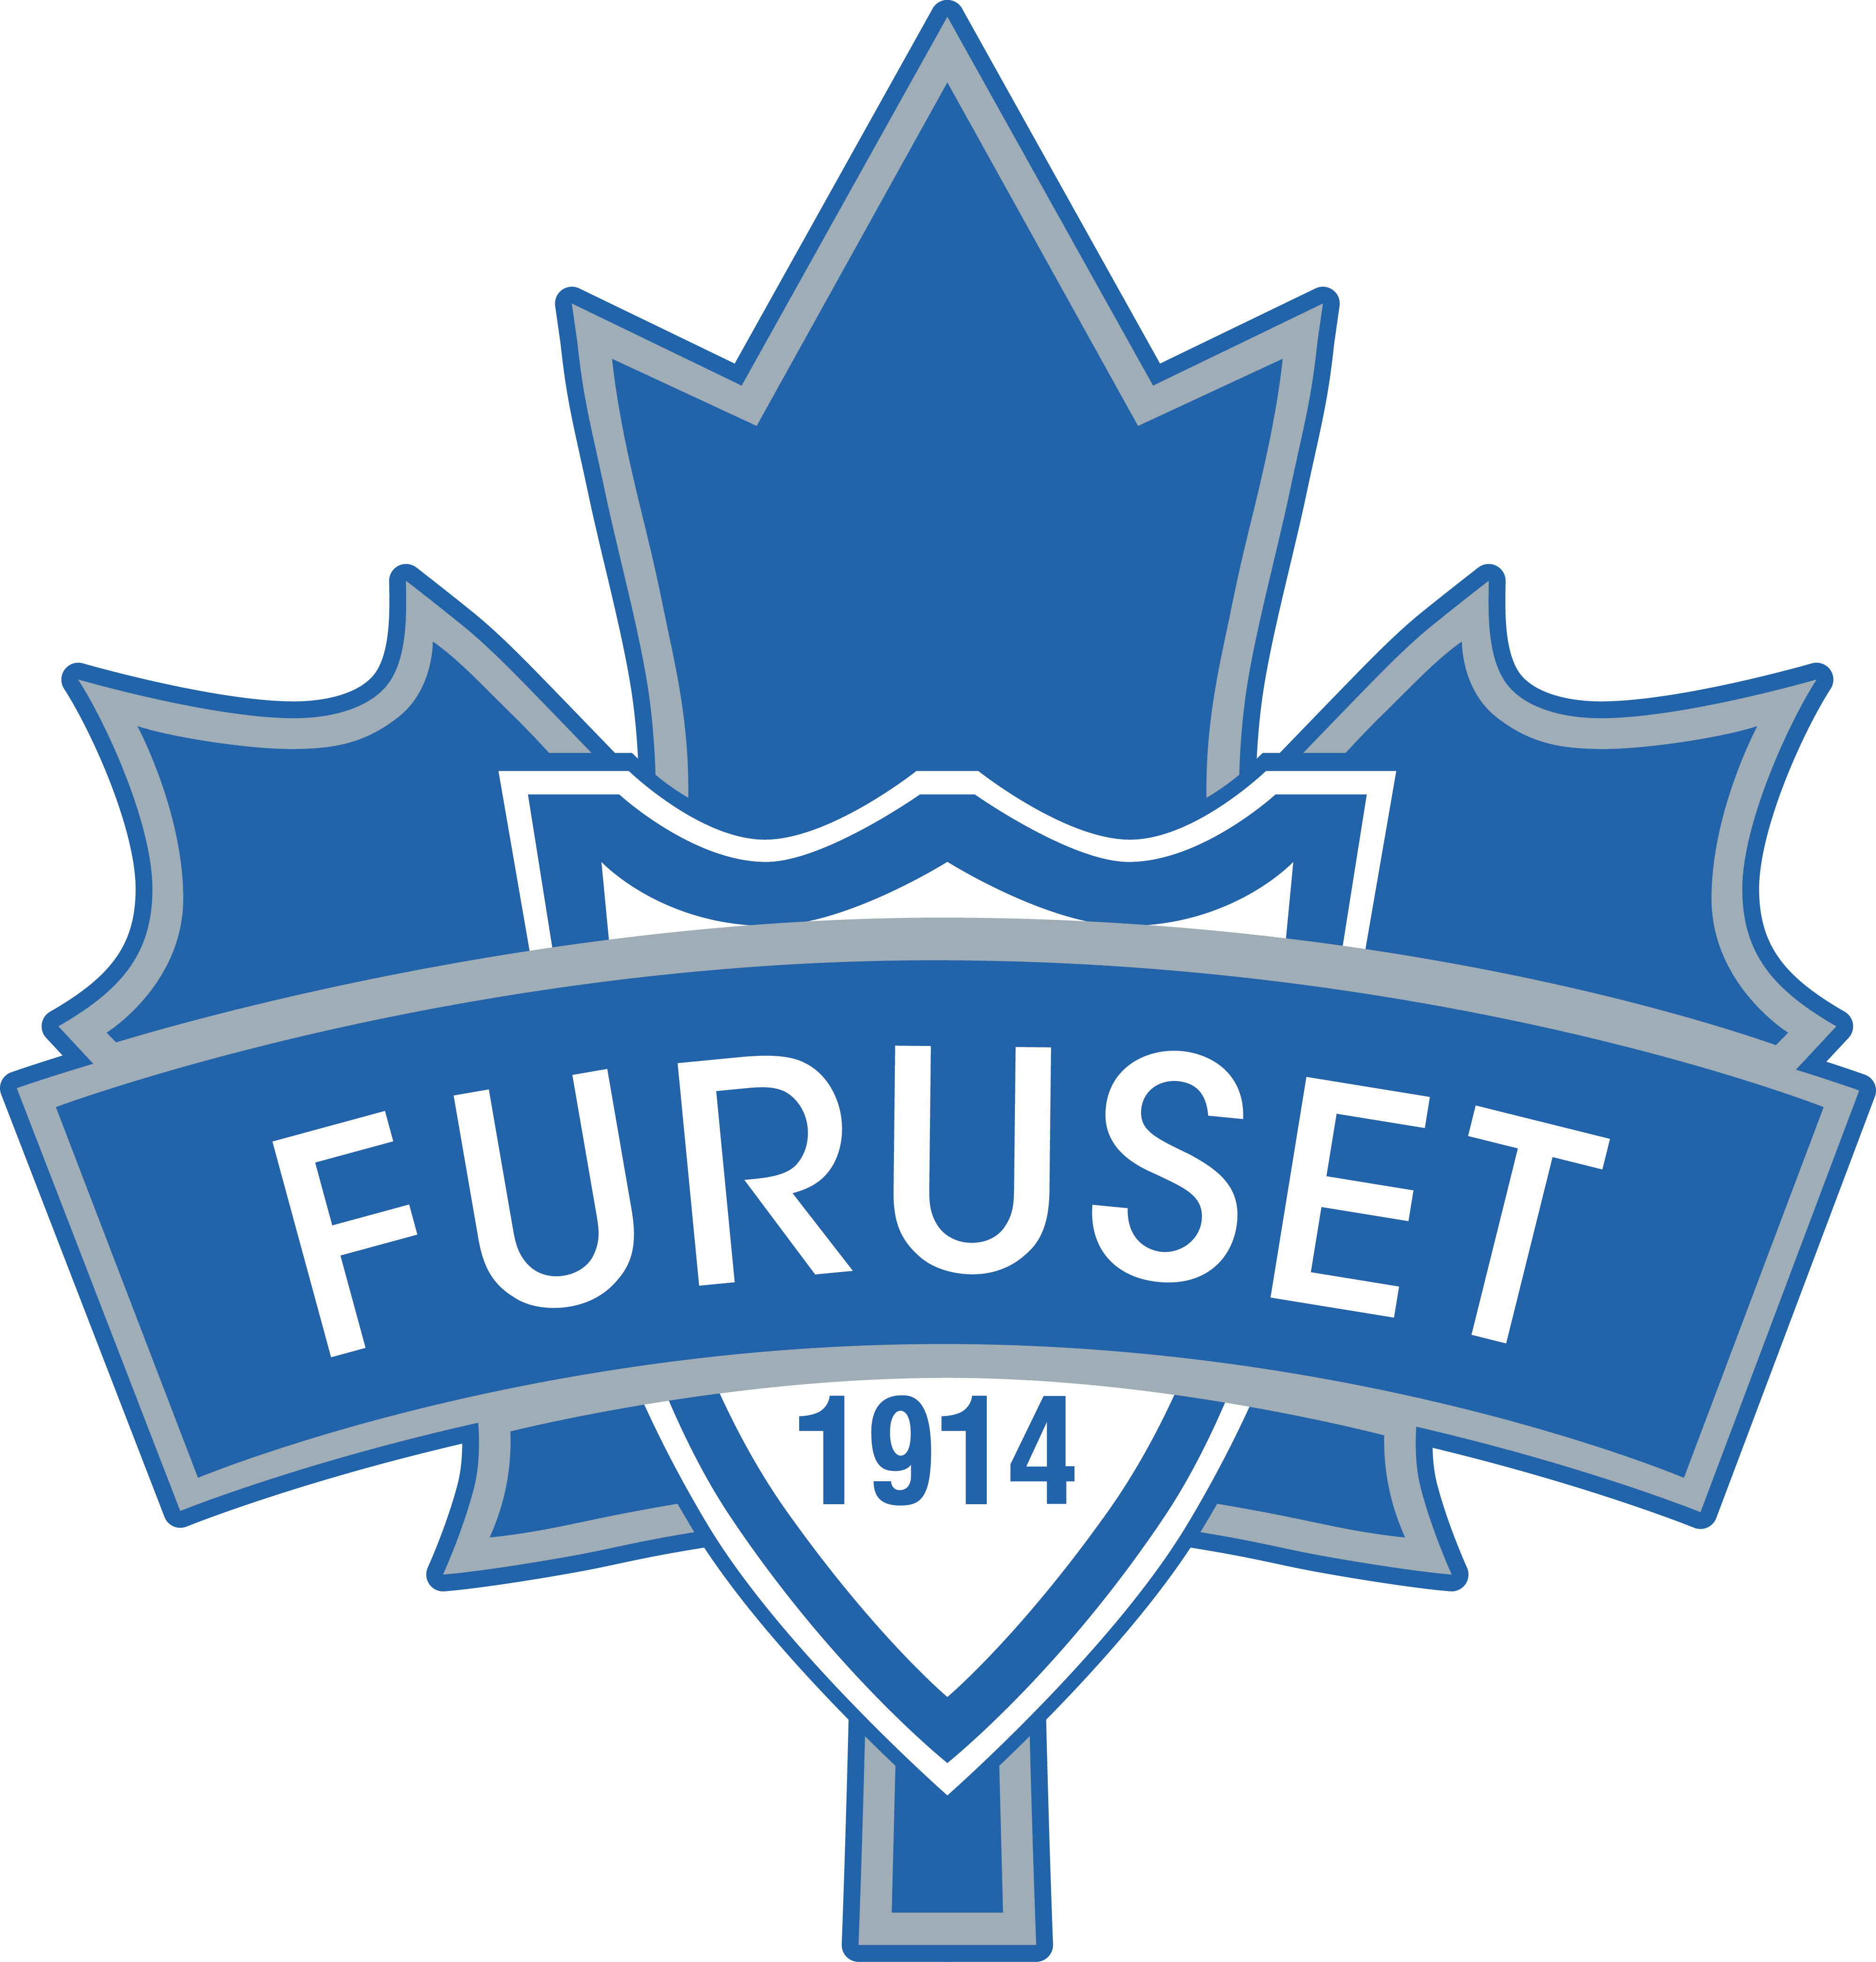 furuset_logo